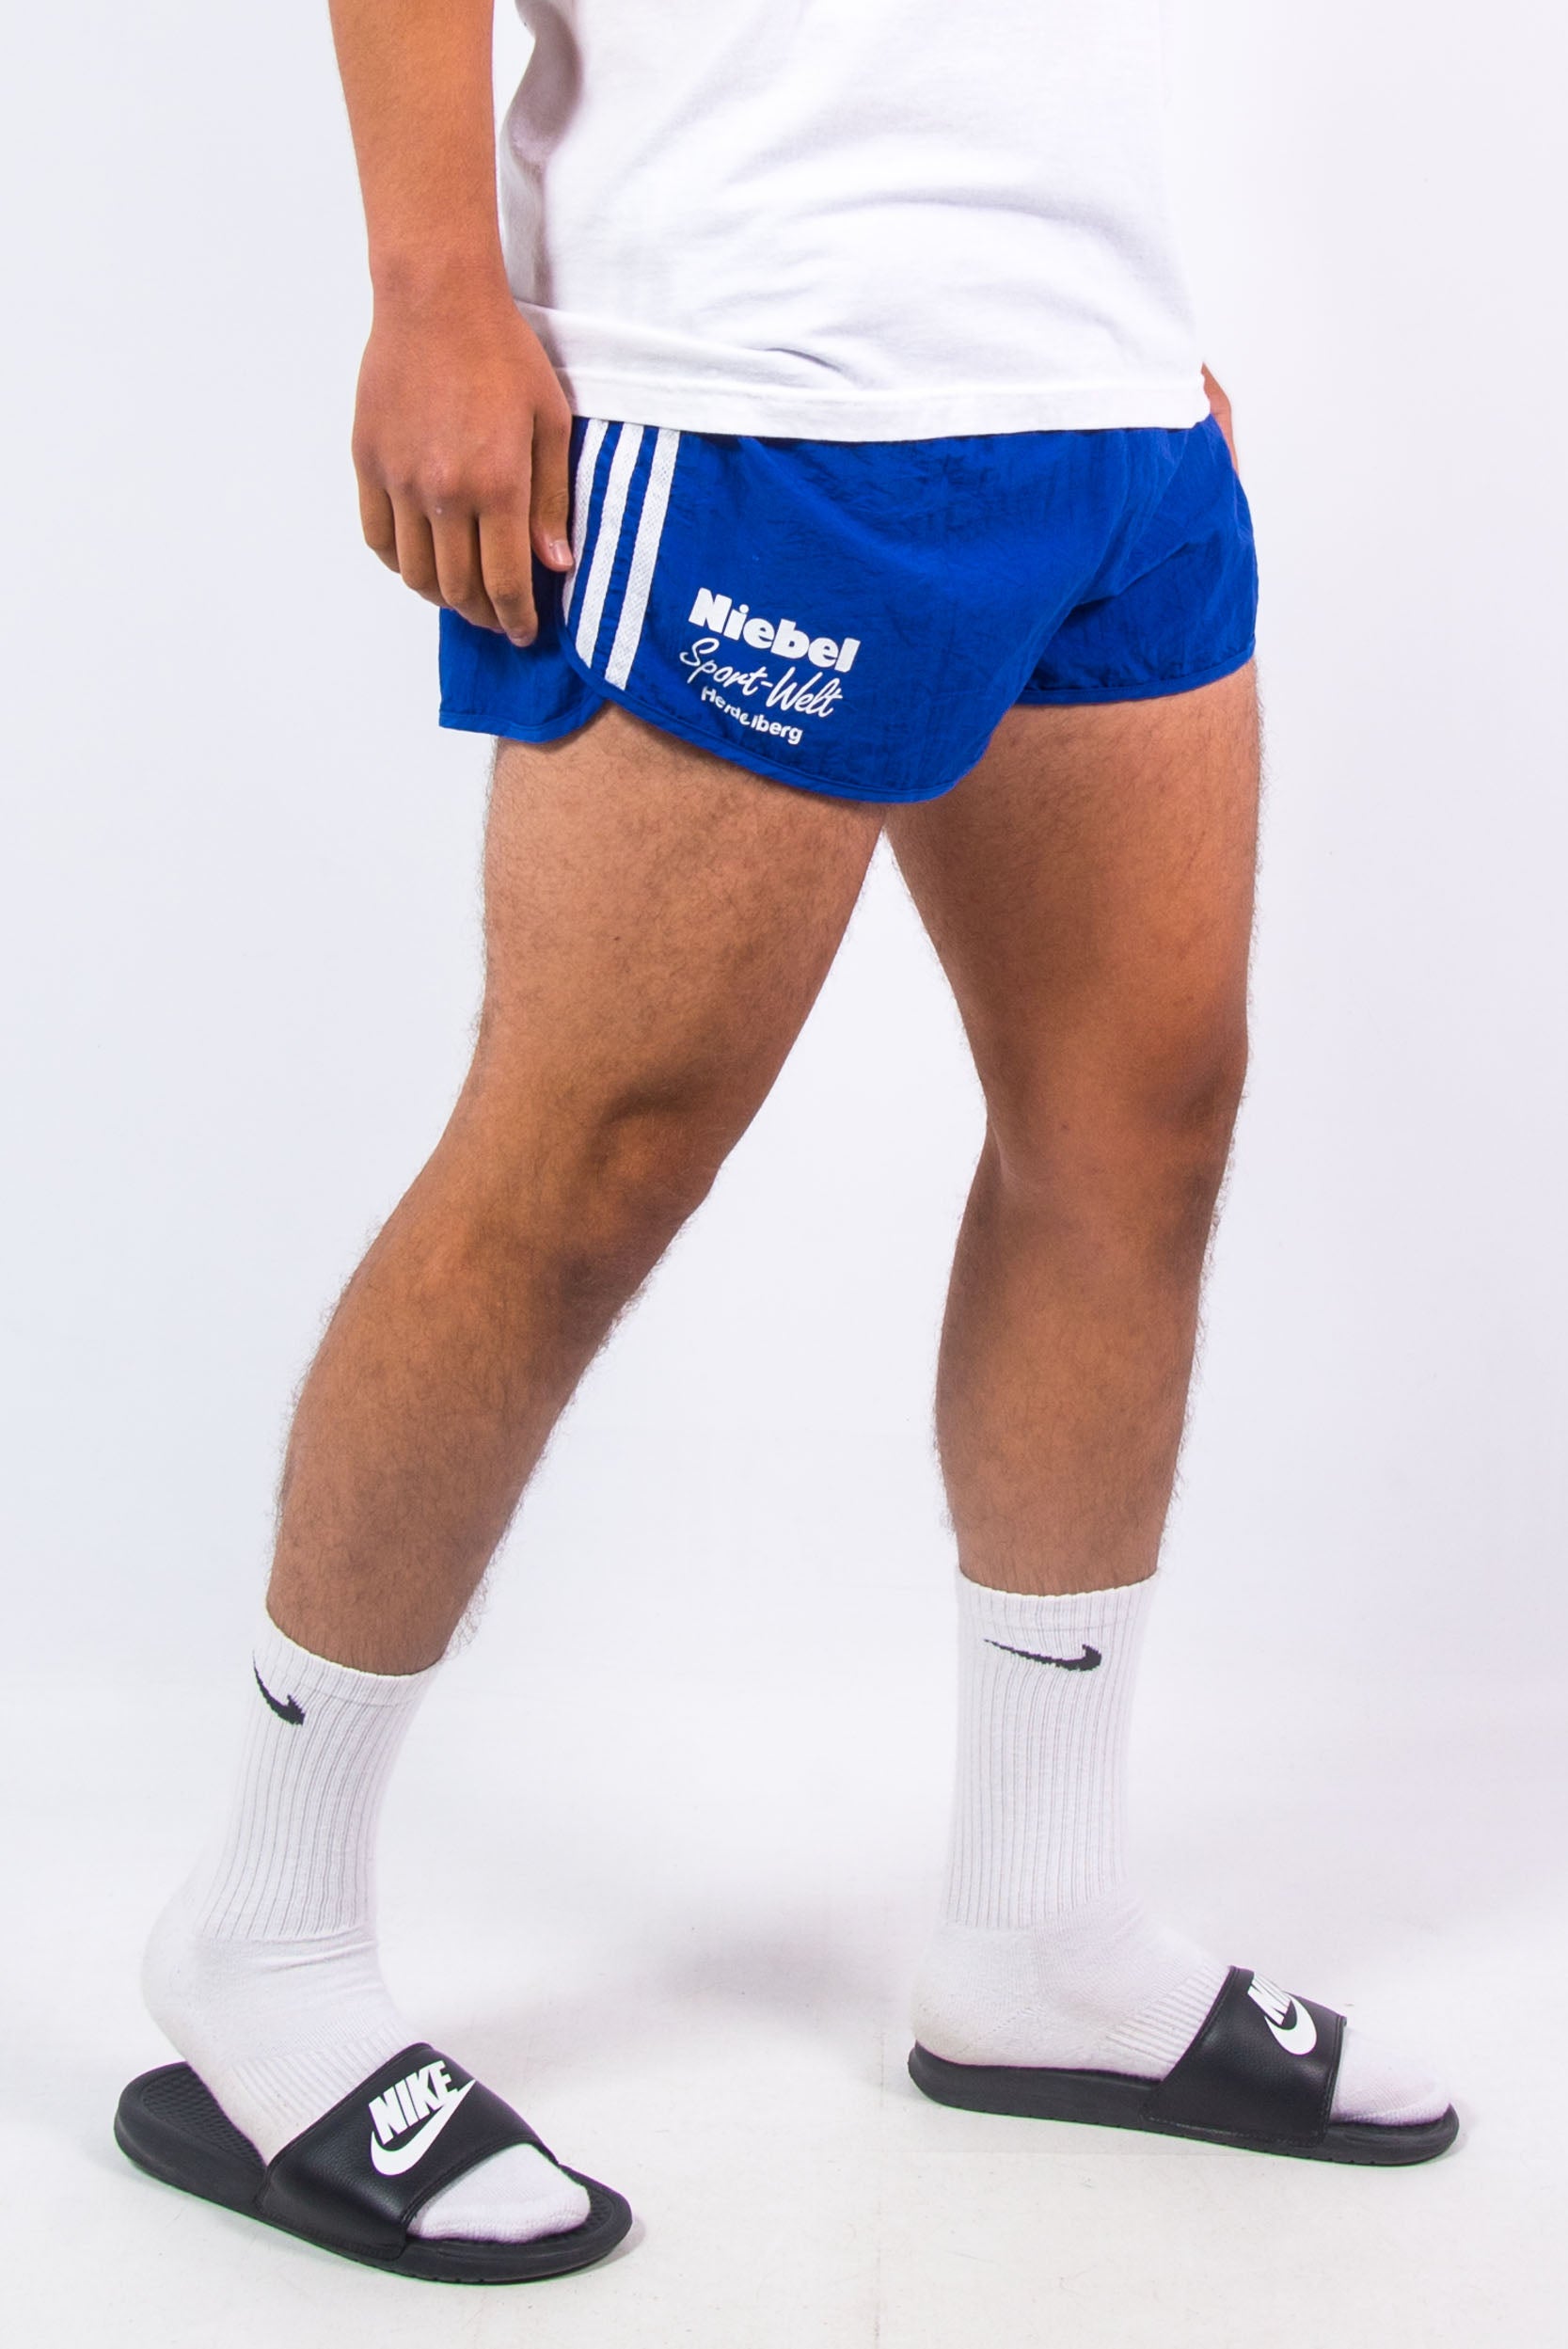 Adidas Shorts by Sportsteen01 on DeviantArt